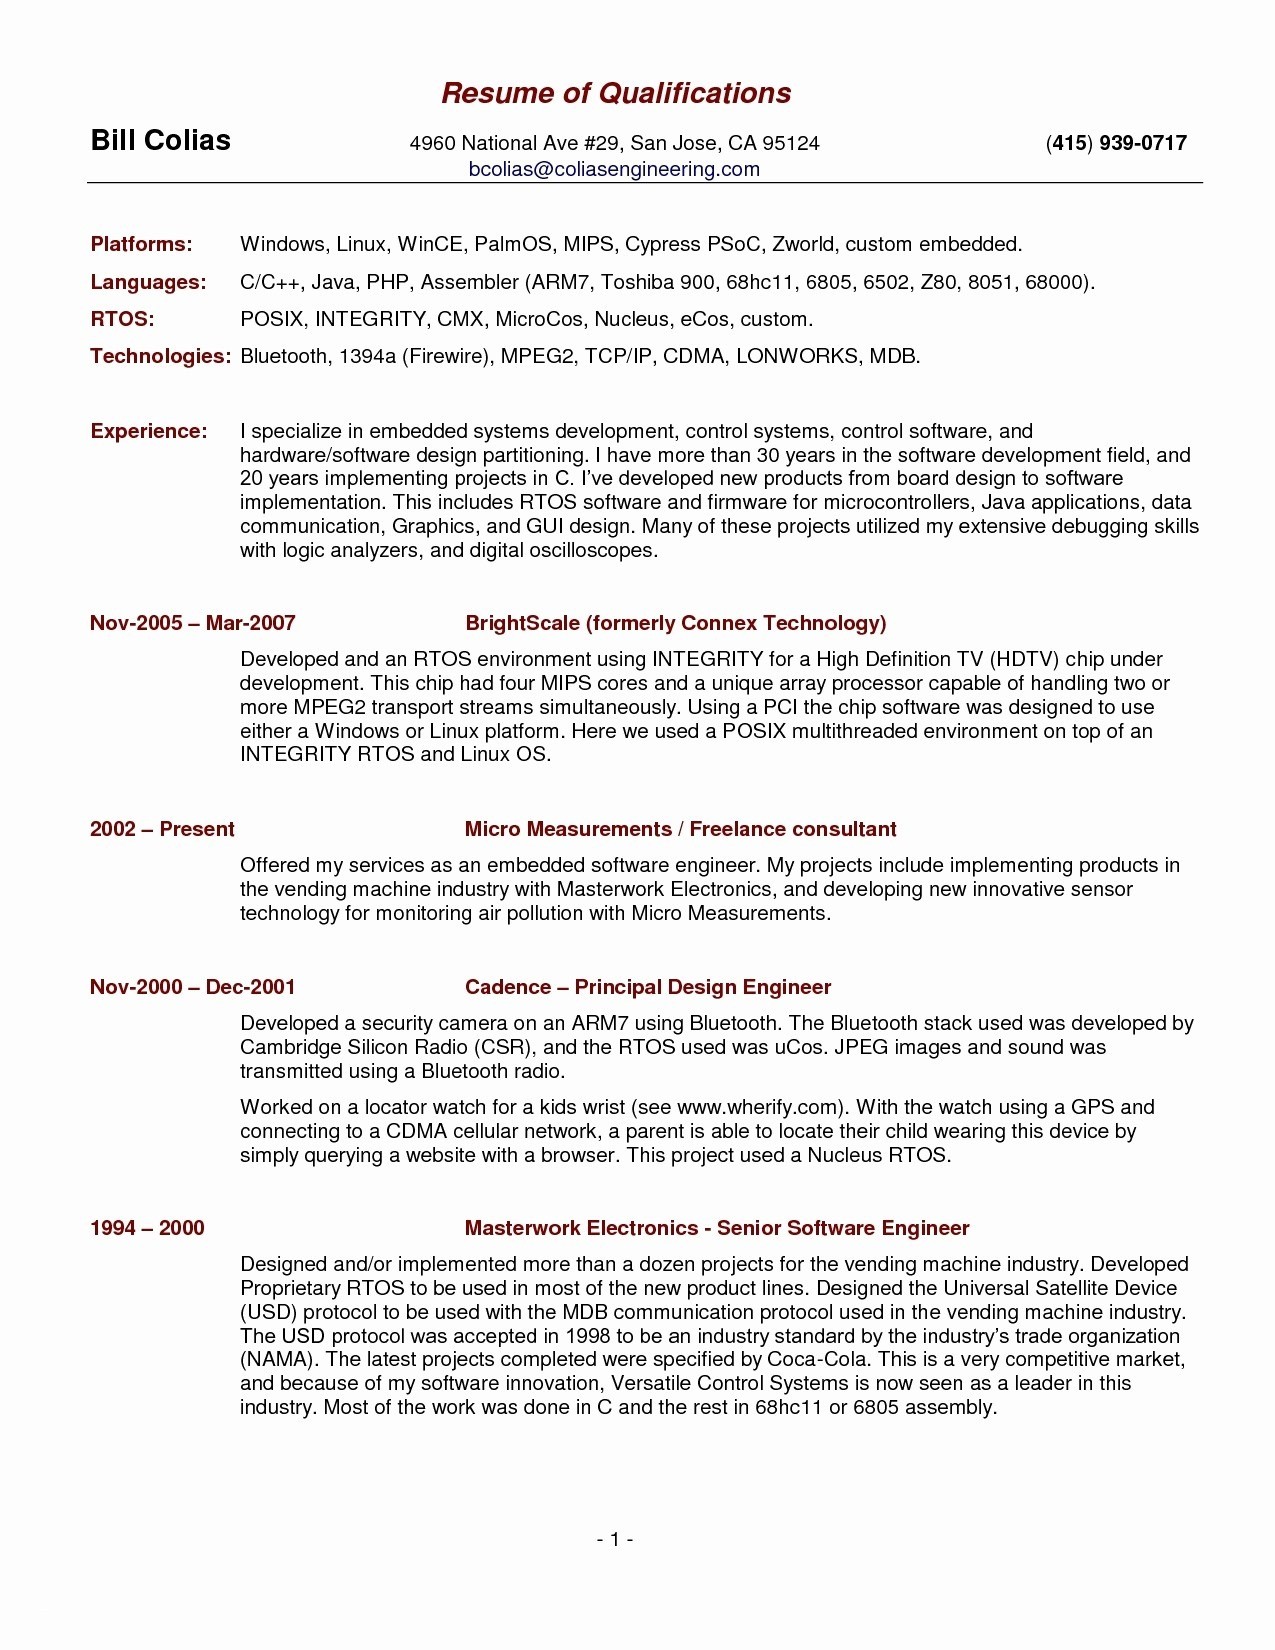 resume with photo fresh resume design templates best resume